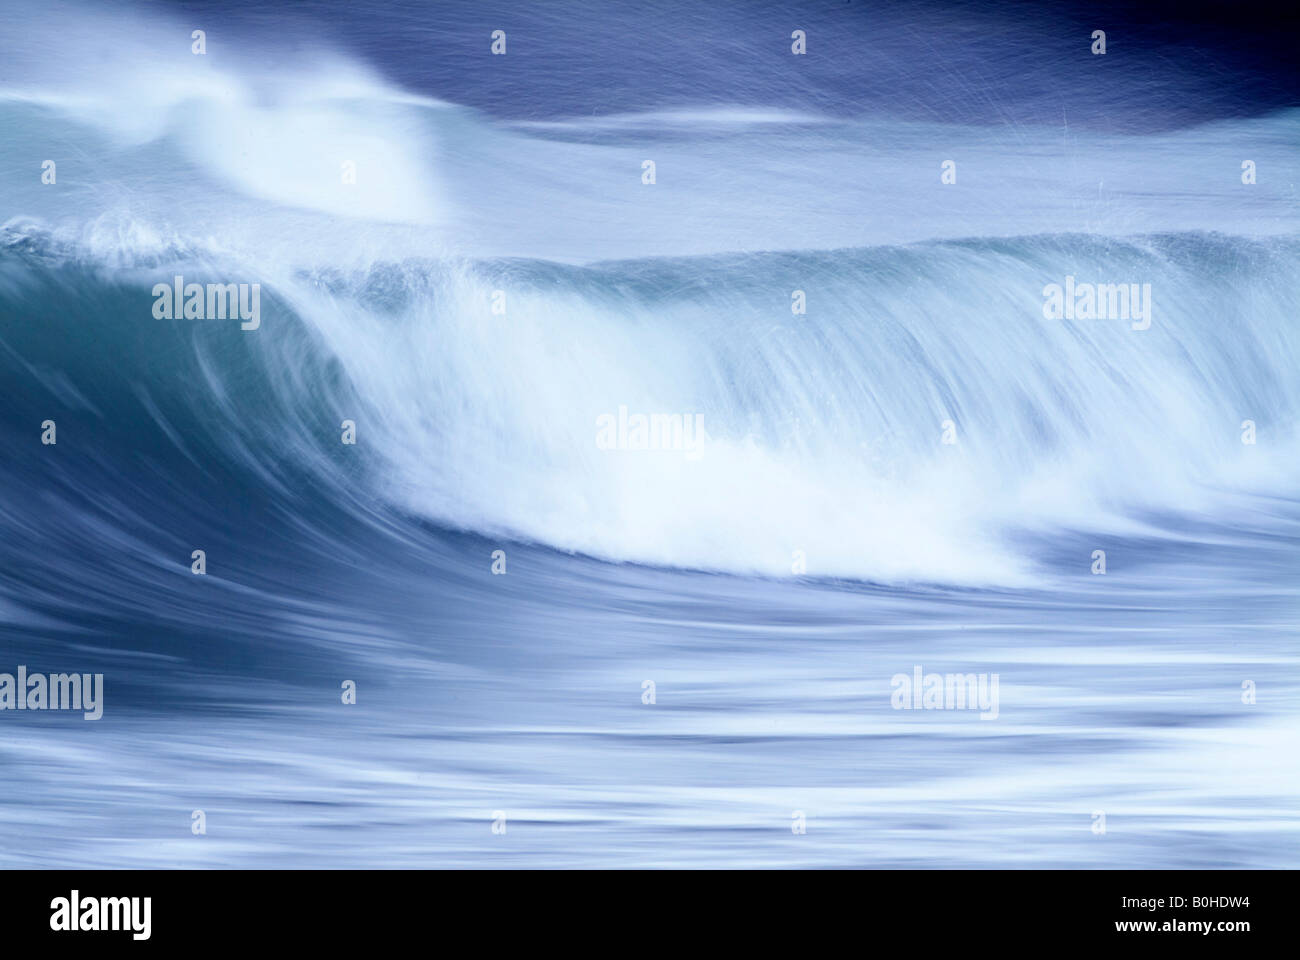 Waves crashing on a beach, blurry, Atlantic Ocean Stock Photo